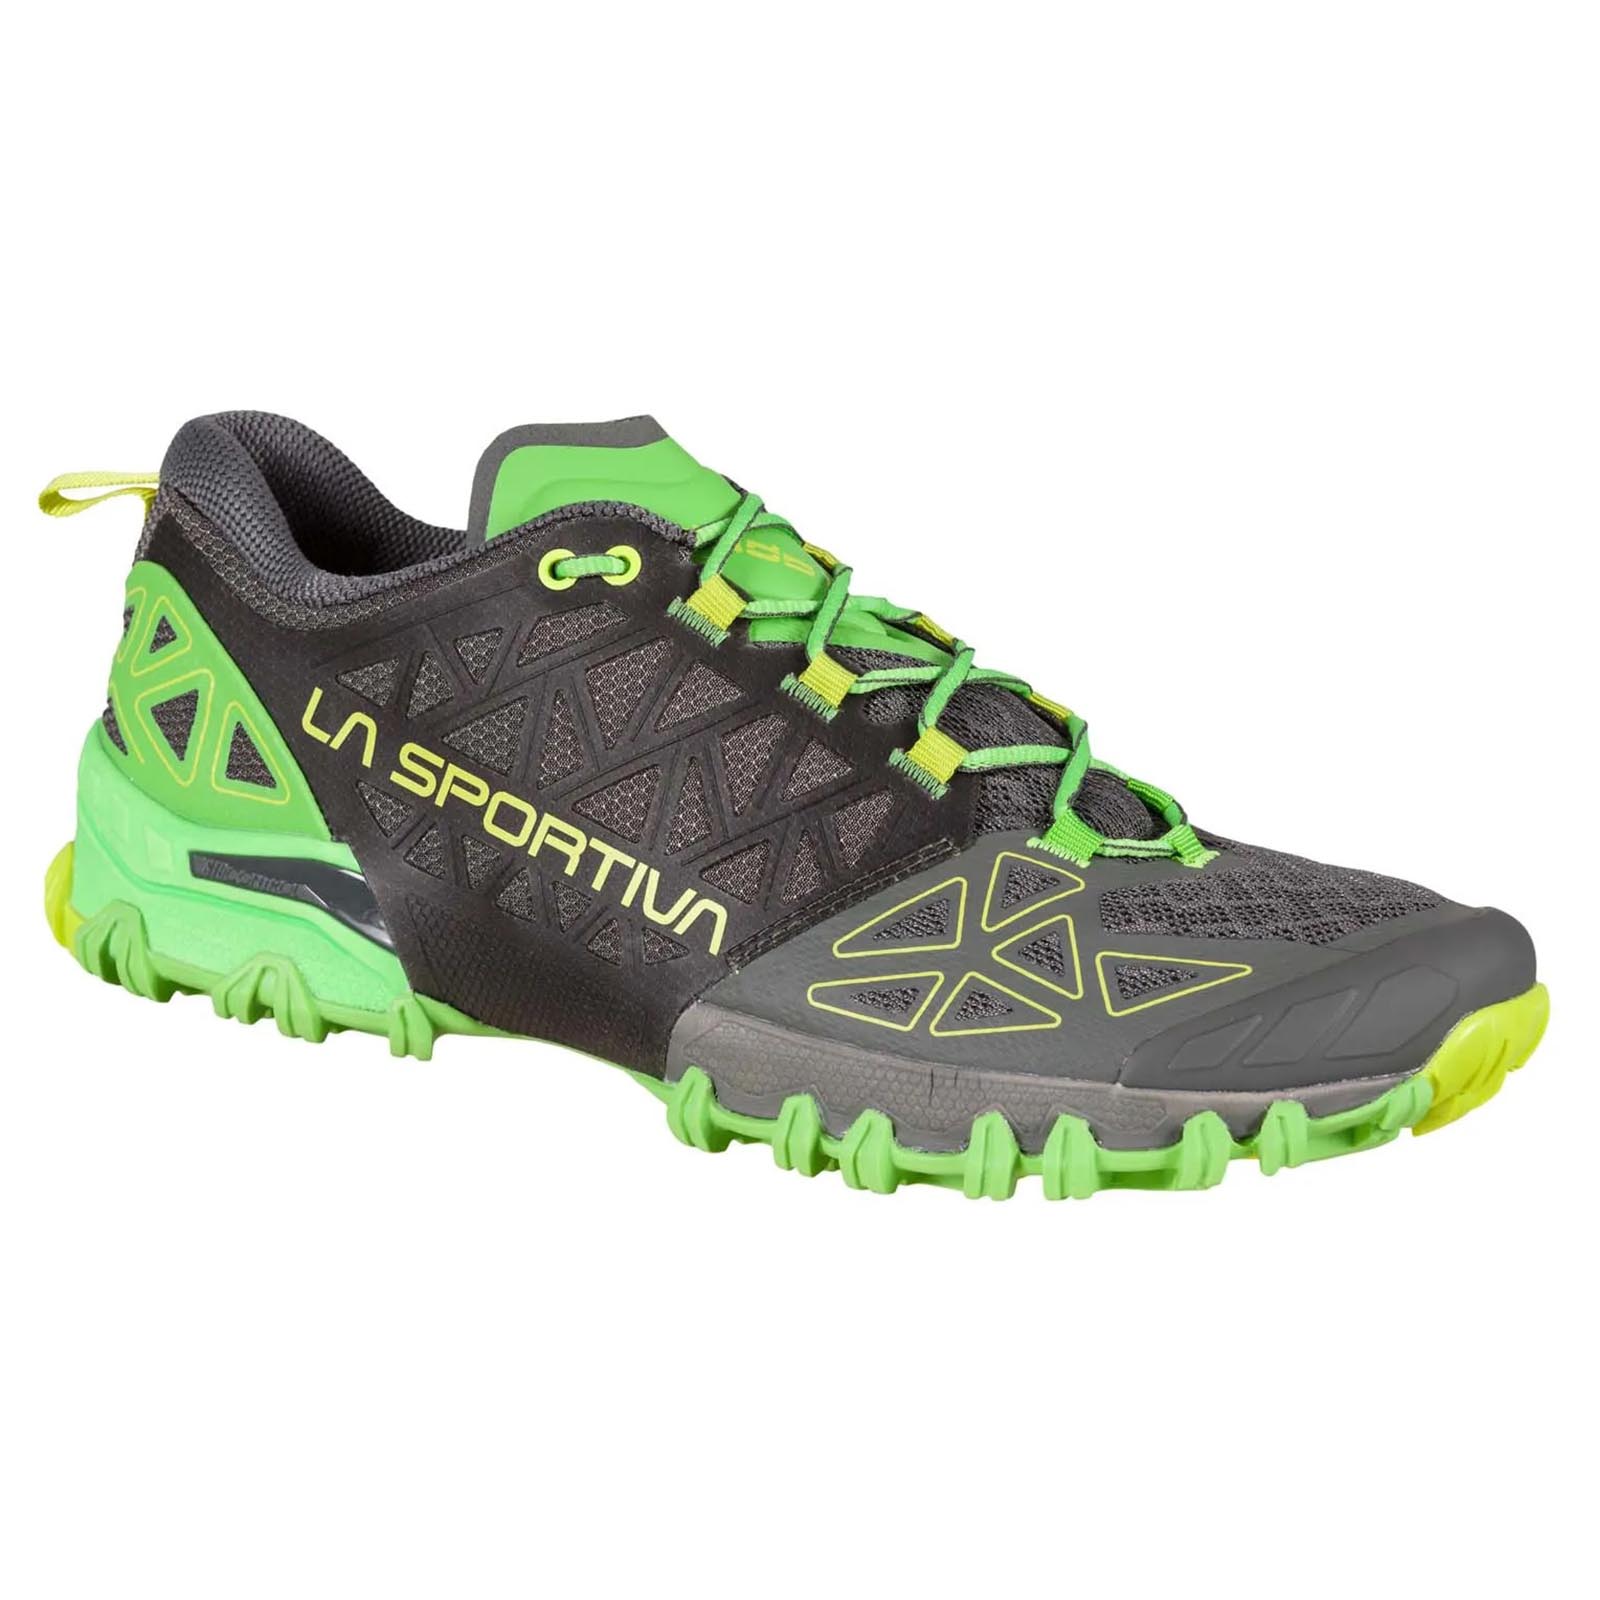 La Sportiva Bushido II Herren Trailrunning Schuhe grün